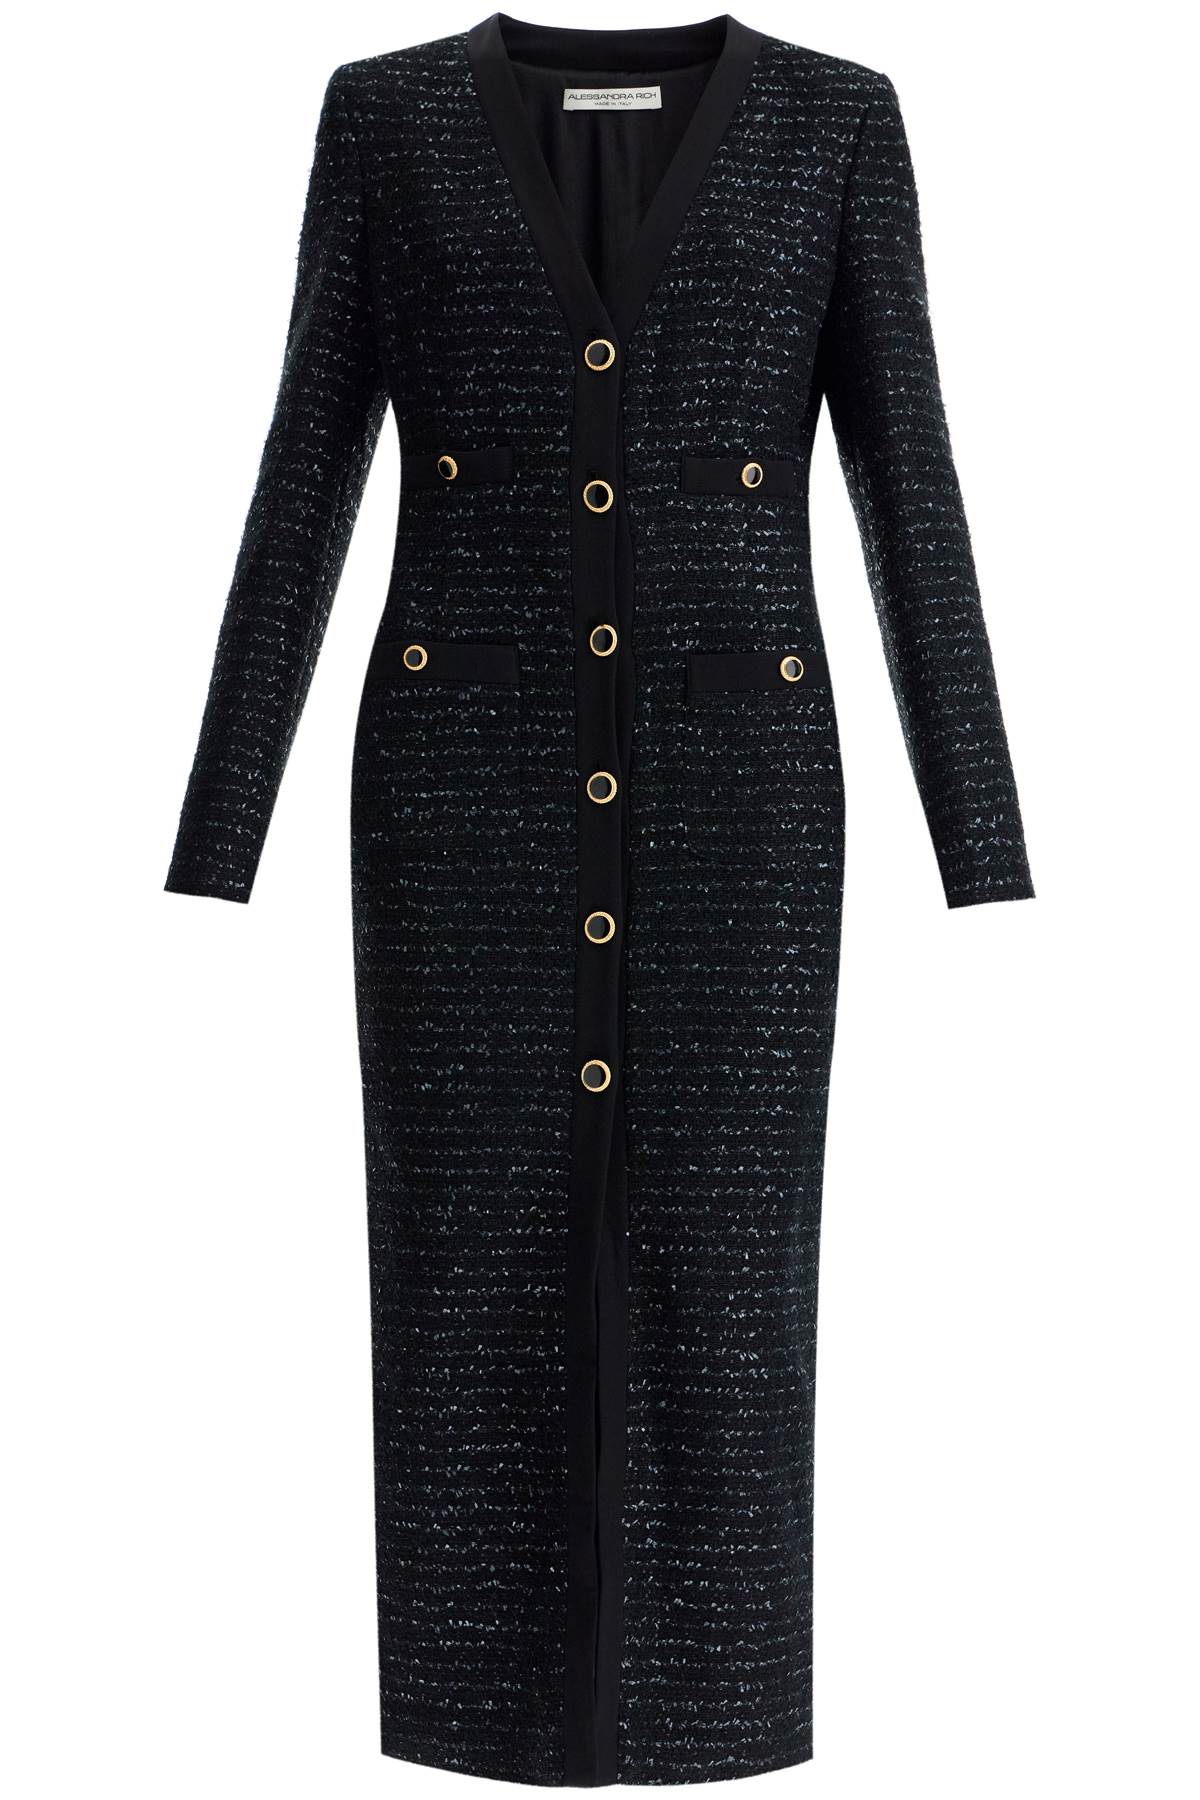 Alessandra Rich Midi Tweed Dress With Sequins   Black